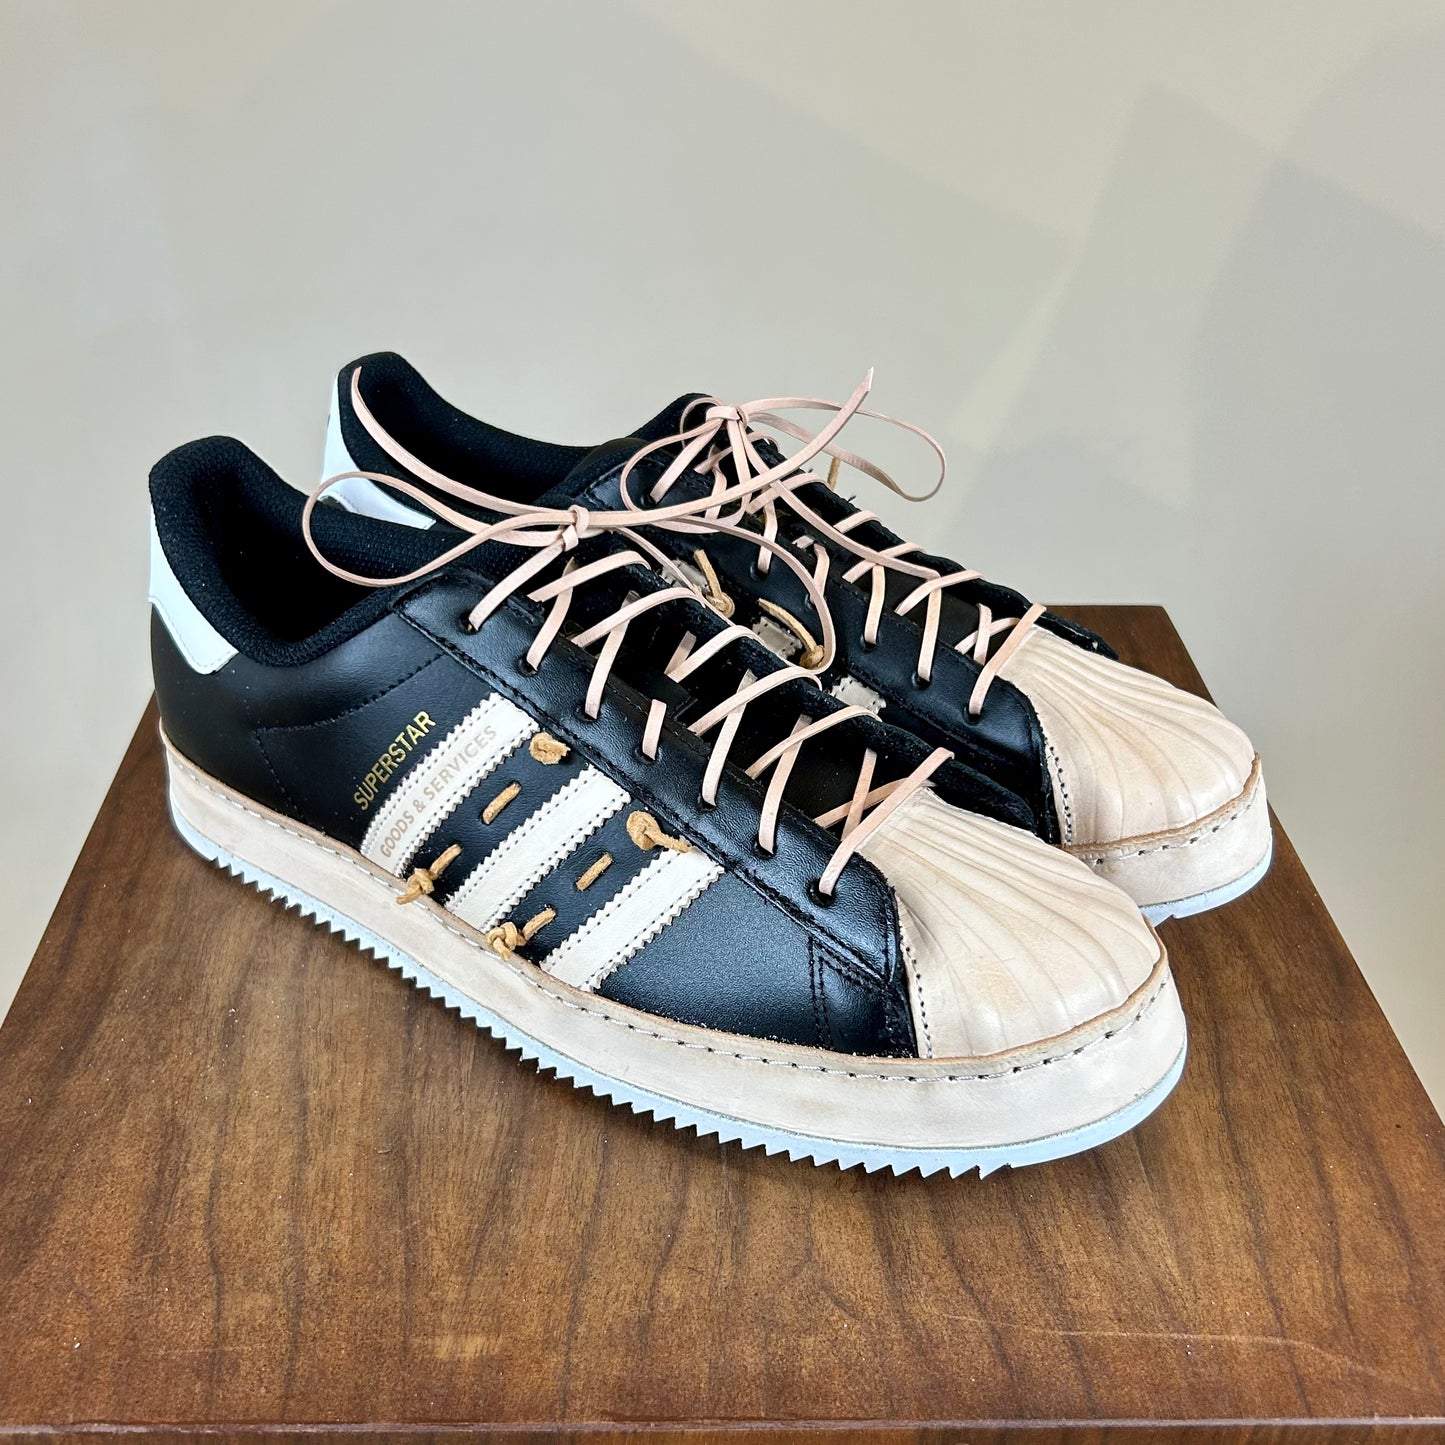 Adidas Superstar Handmade Leather Resole